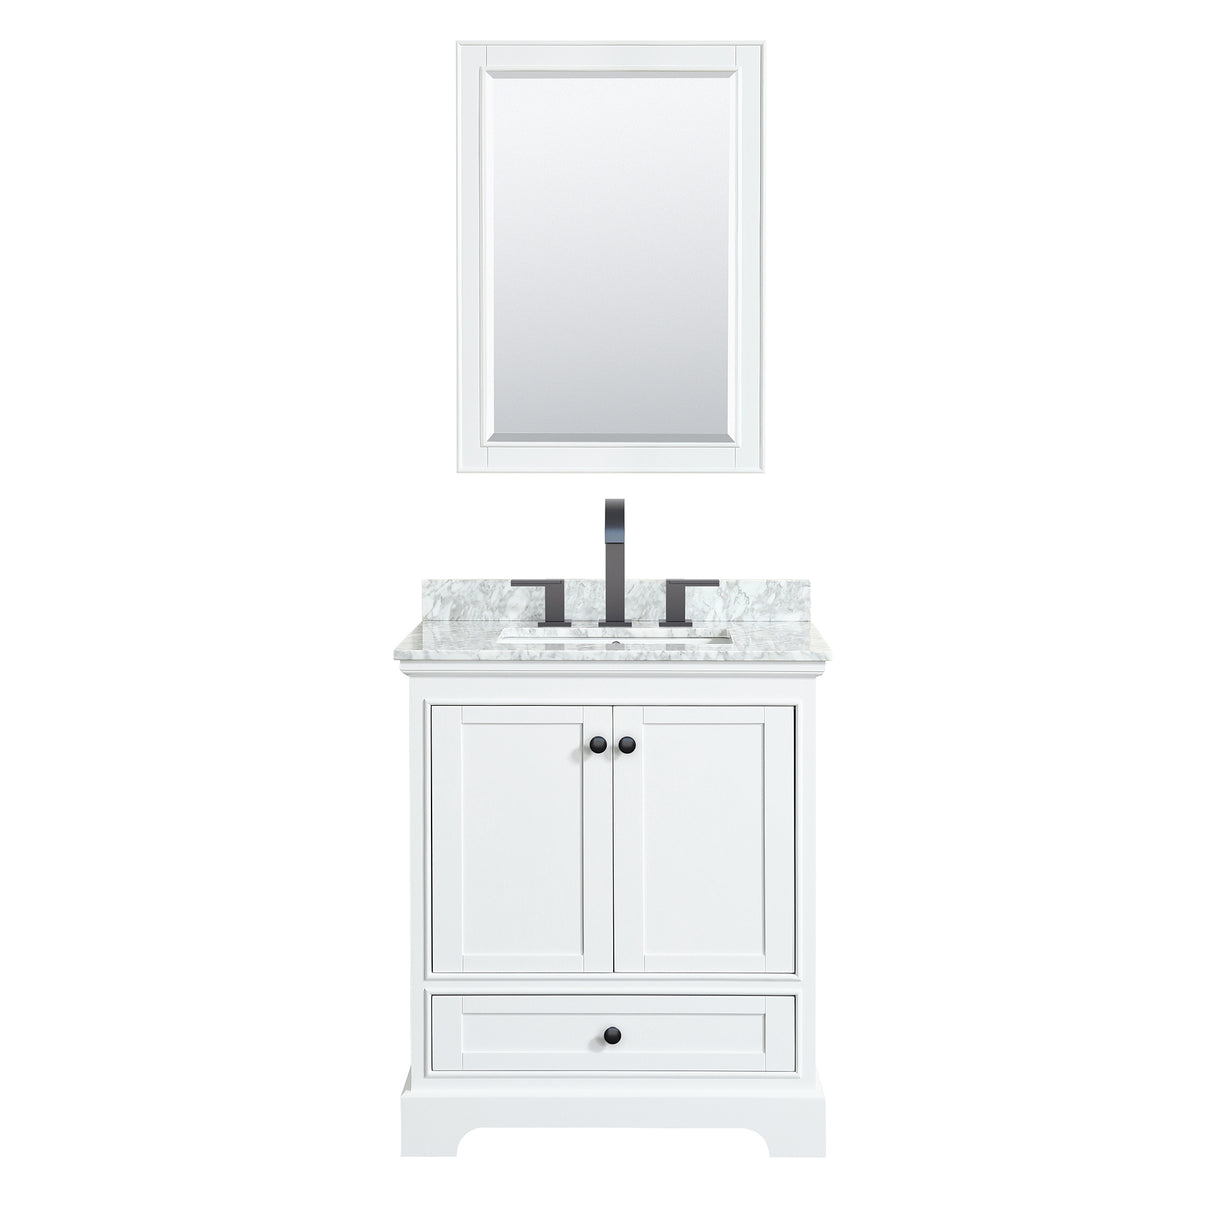 Deborah 30 Inch Single Bathroom Vanity in White White Carrara Marble Countertop Undermount Square Sink Matte Black Trim 24 Inch Mirror